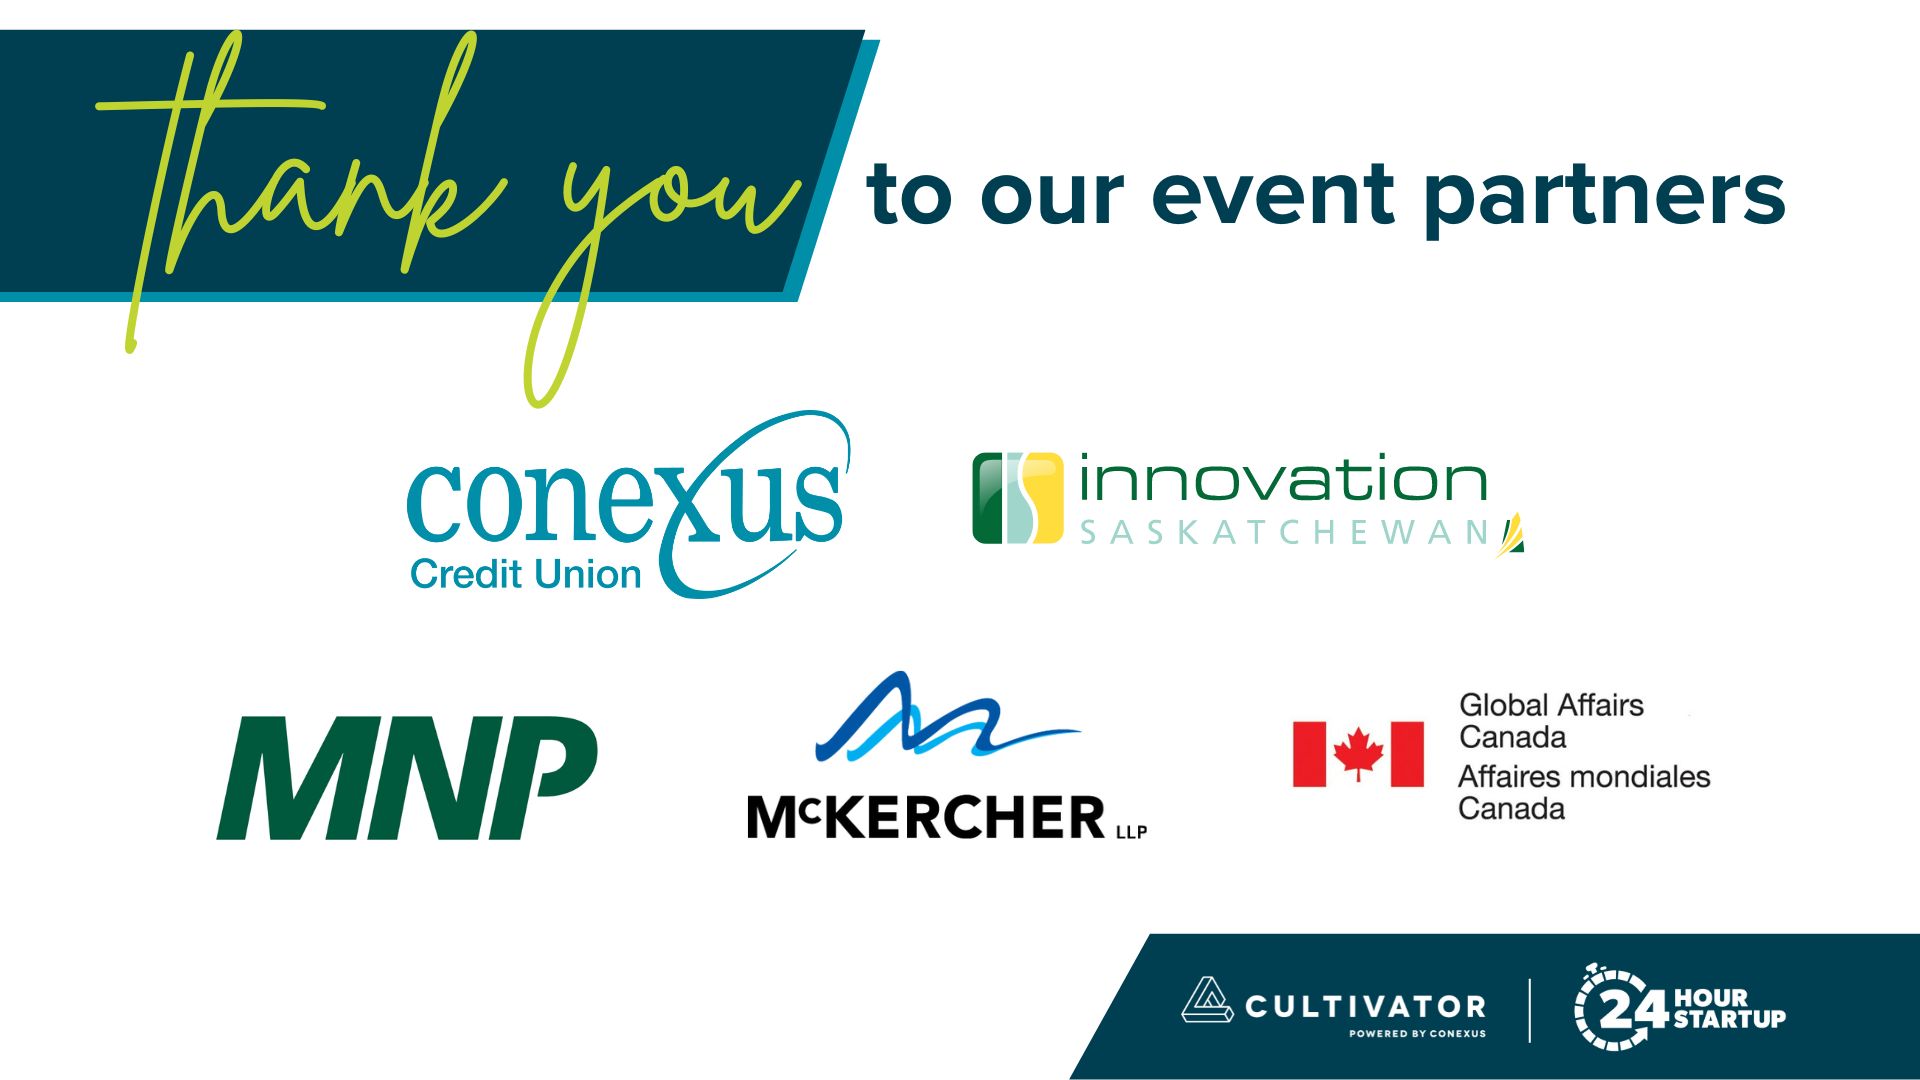 Partner Logos - 24 Hour and 4th Birthday - Conexus Credit Union - Innovation Saskatchewan - MNP - McKercher LLP - Global Affairs Canada